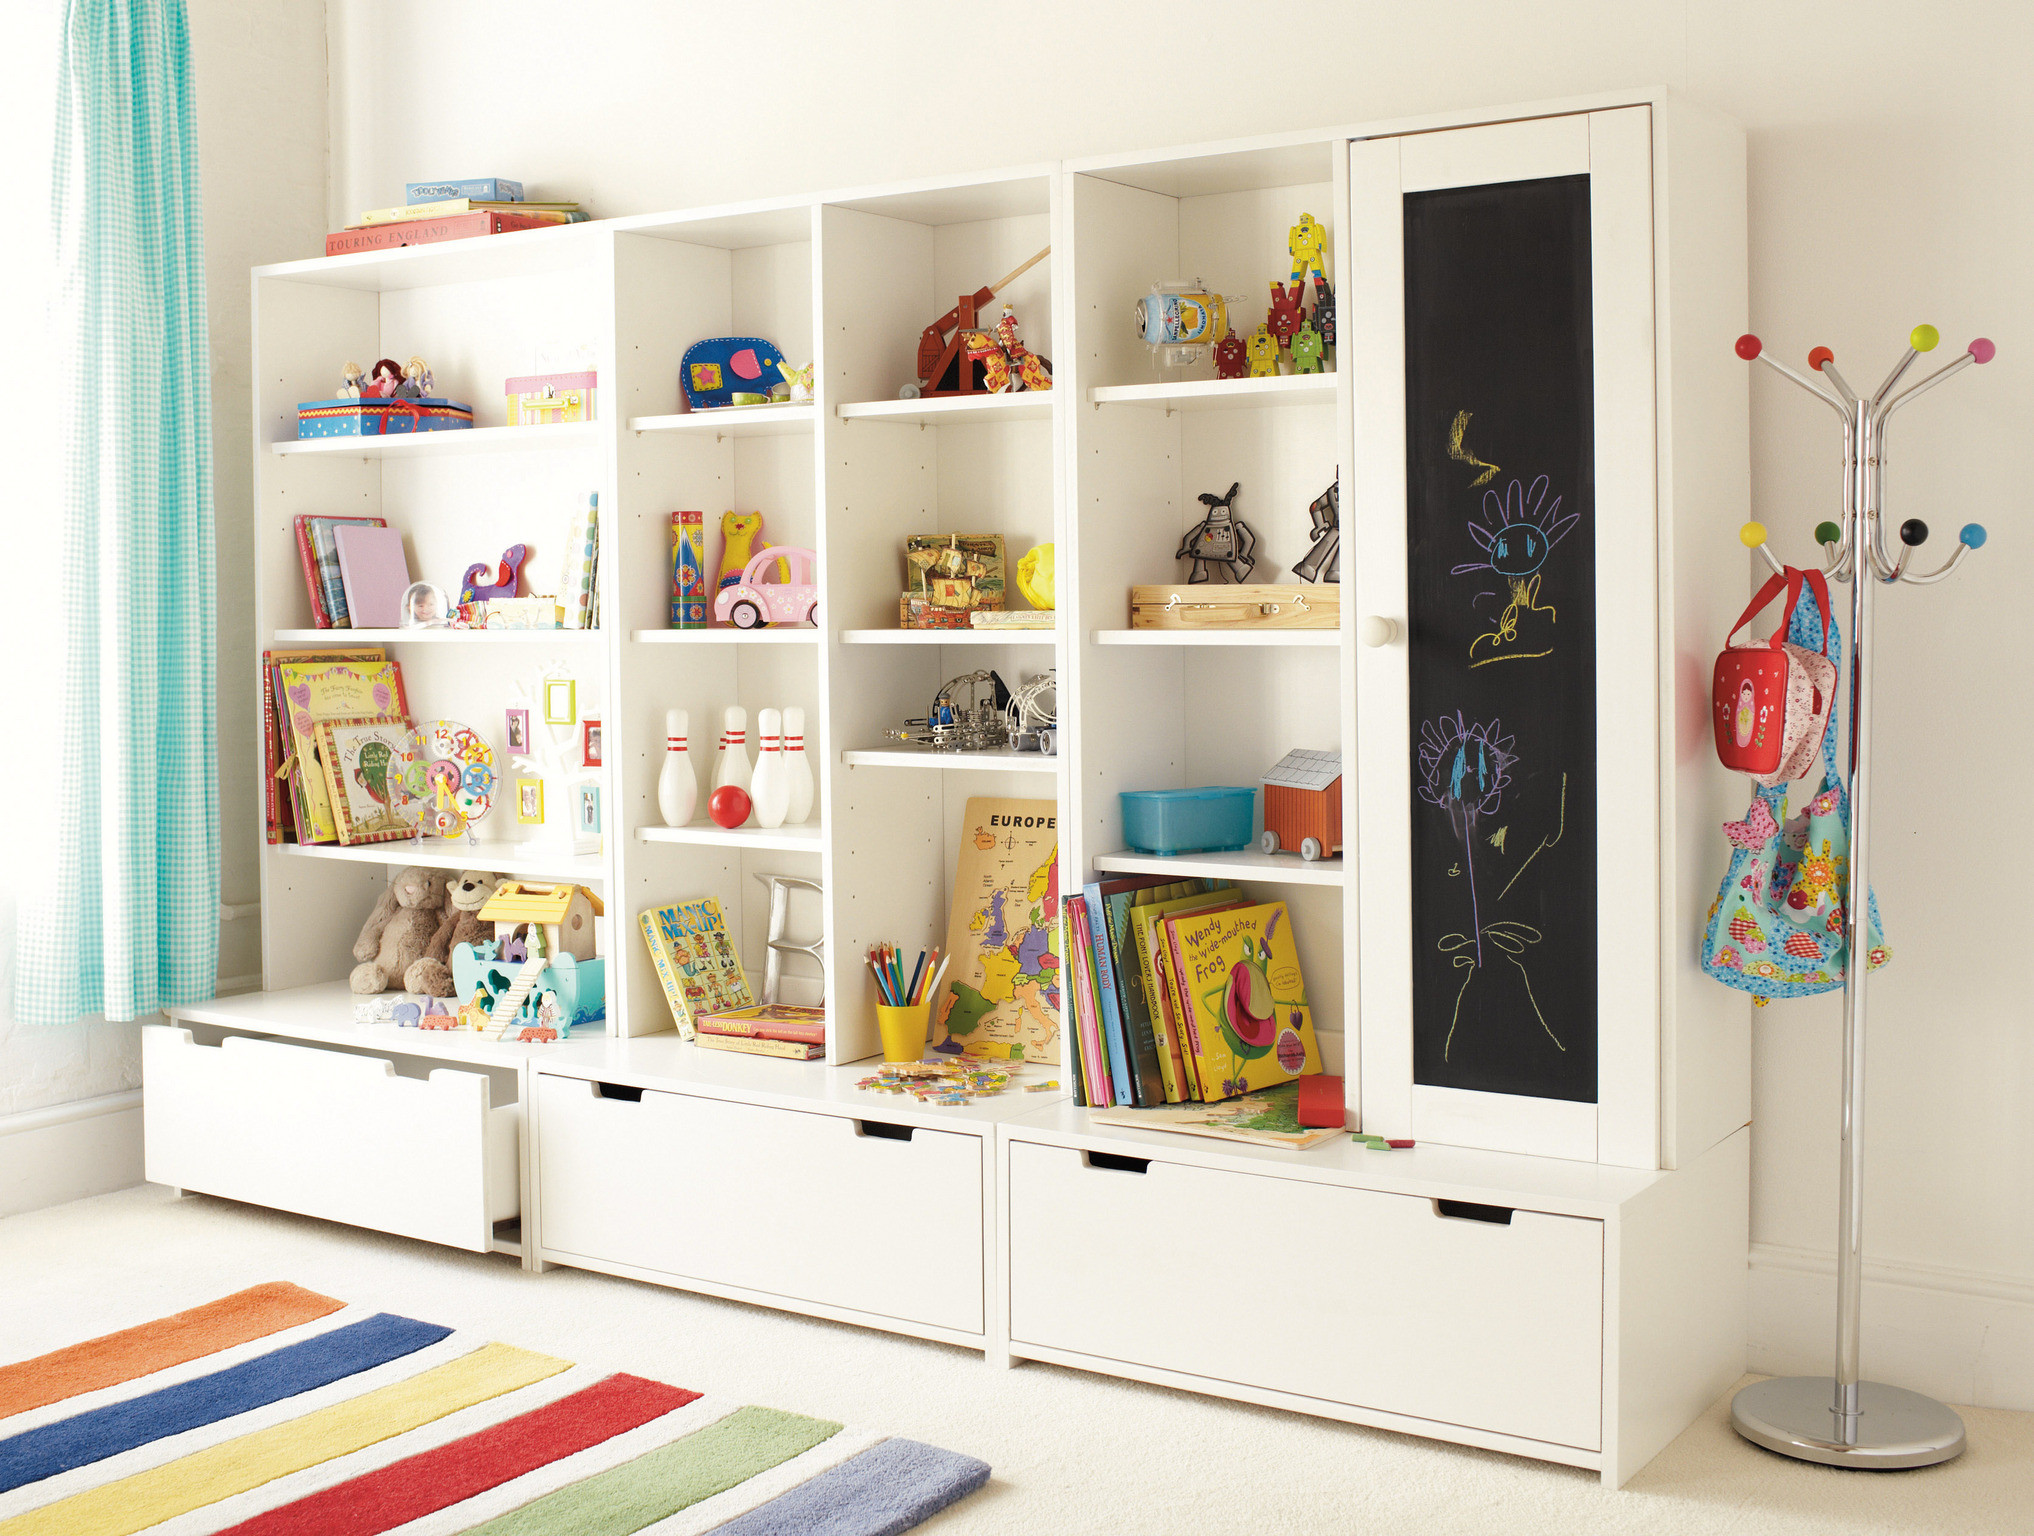 Storage Shelves For Kids Room
 Most Precise Children’s Playroom Storage Ideas 42 Room